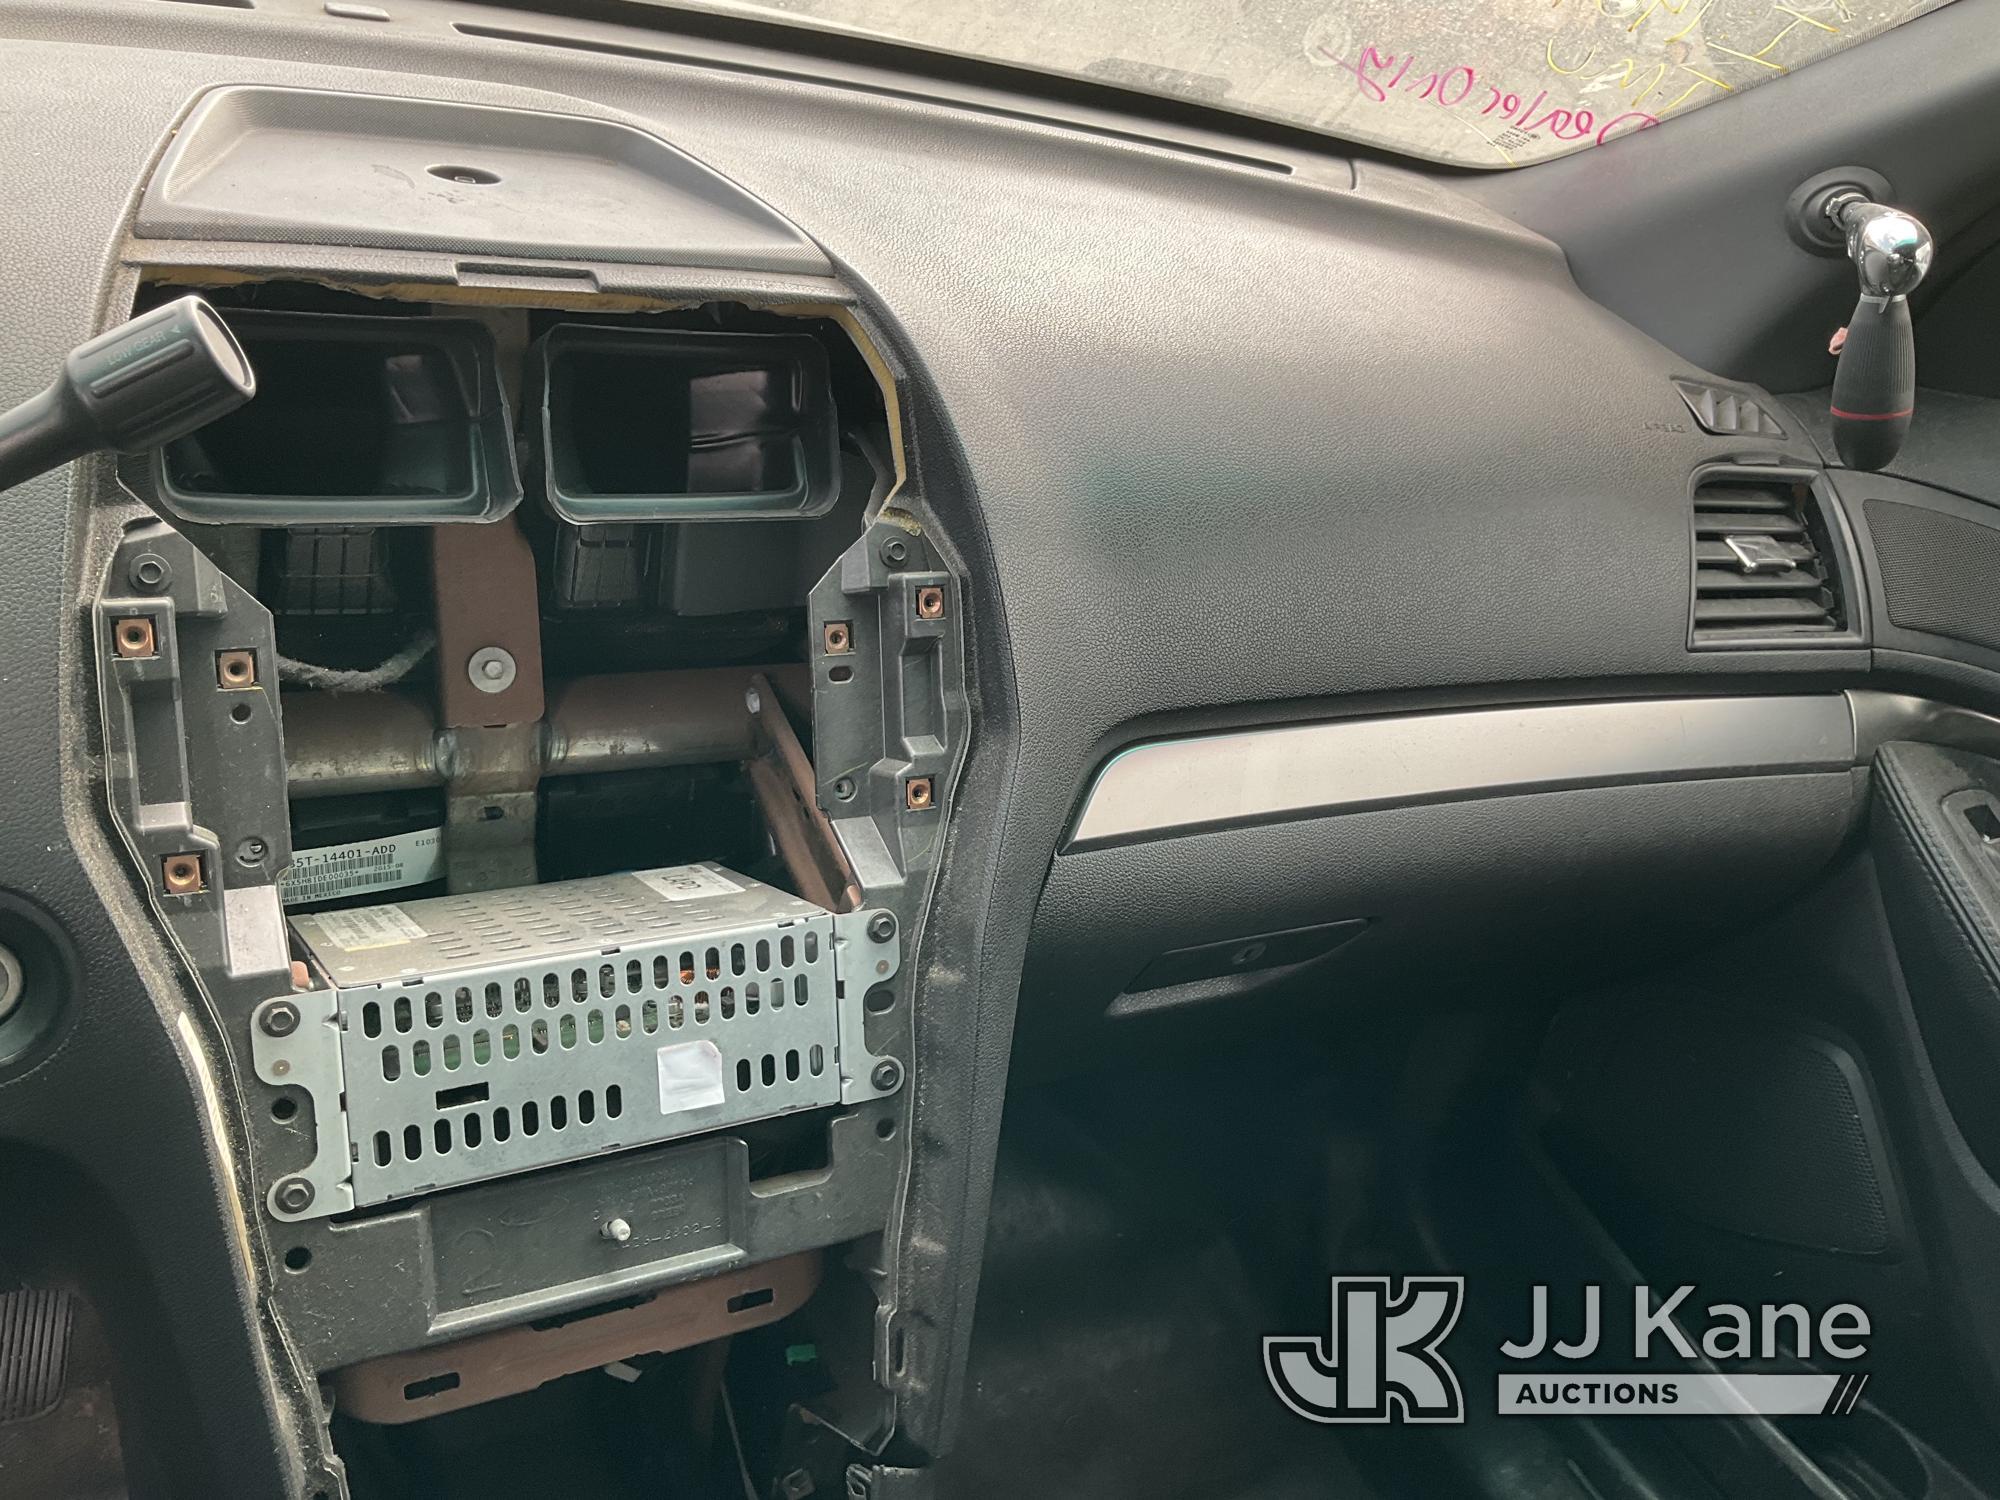 (Jurupa Valley, CA) 2016 Ford Explorer AWD Police Interceptor 4-Door Sport Utility Vehicle Not Runni